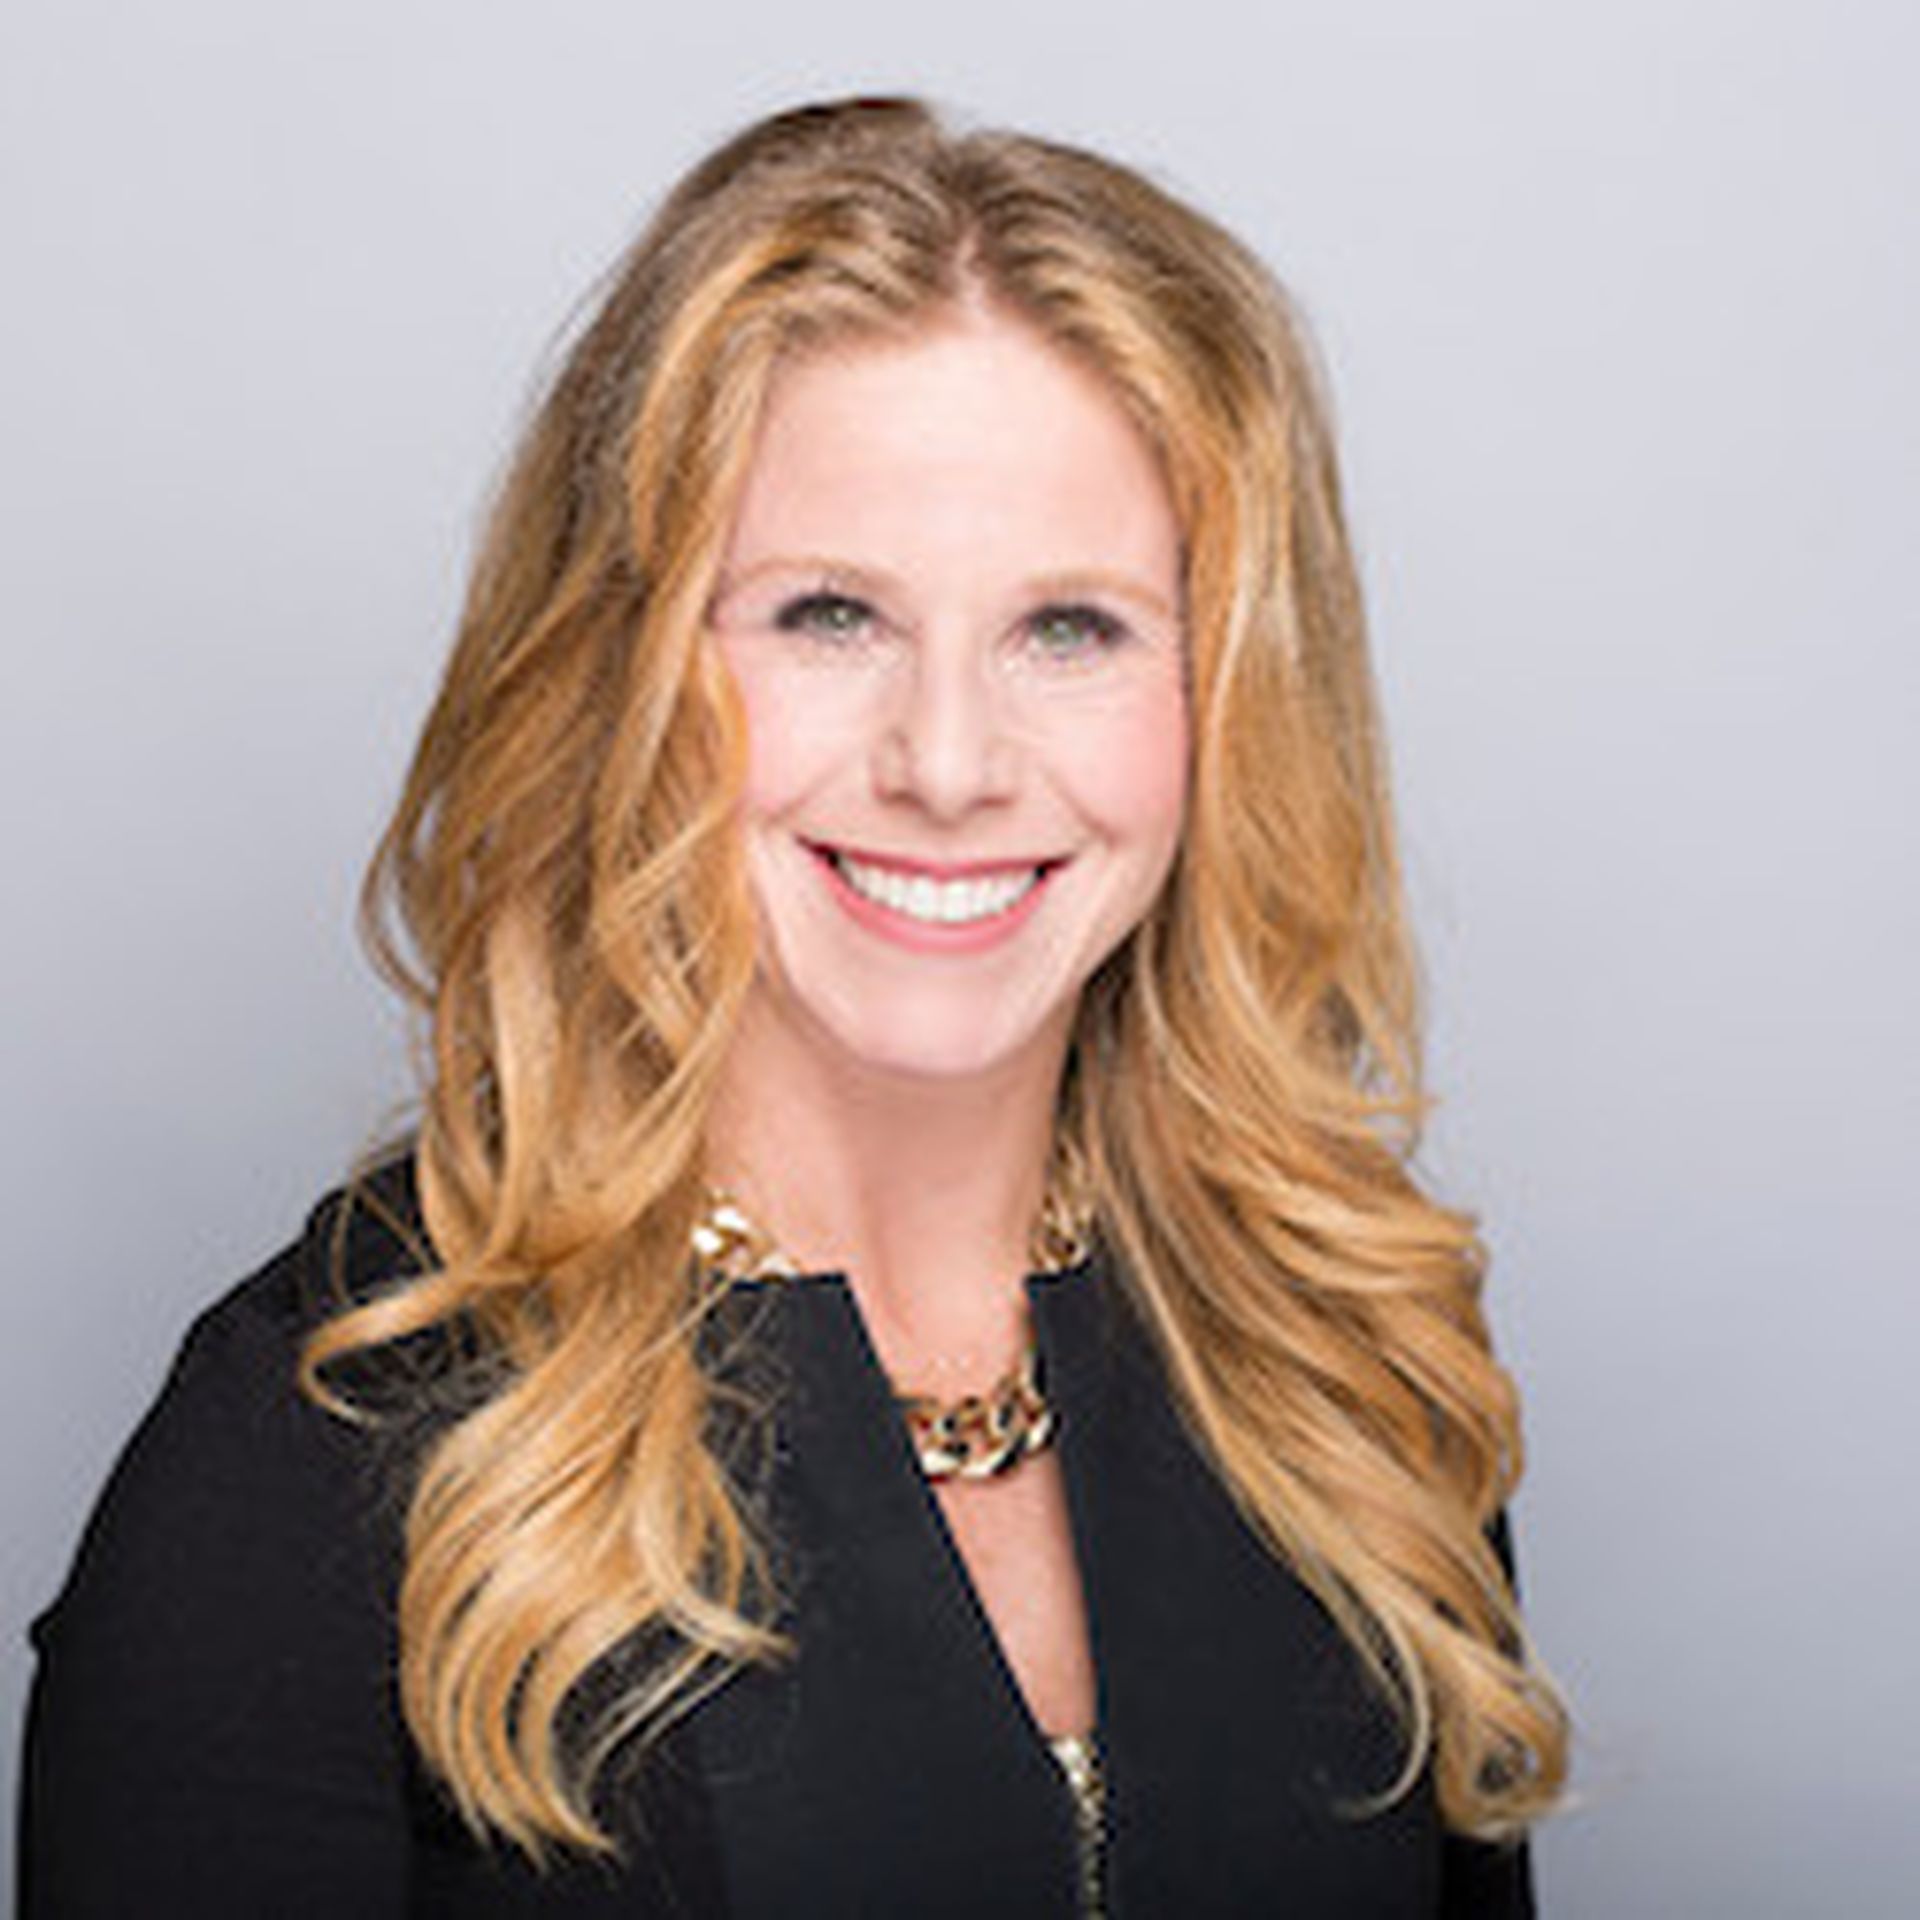 Distil Networks CEO Tiffany Olson Kleeman